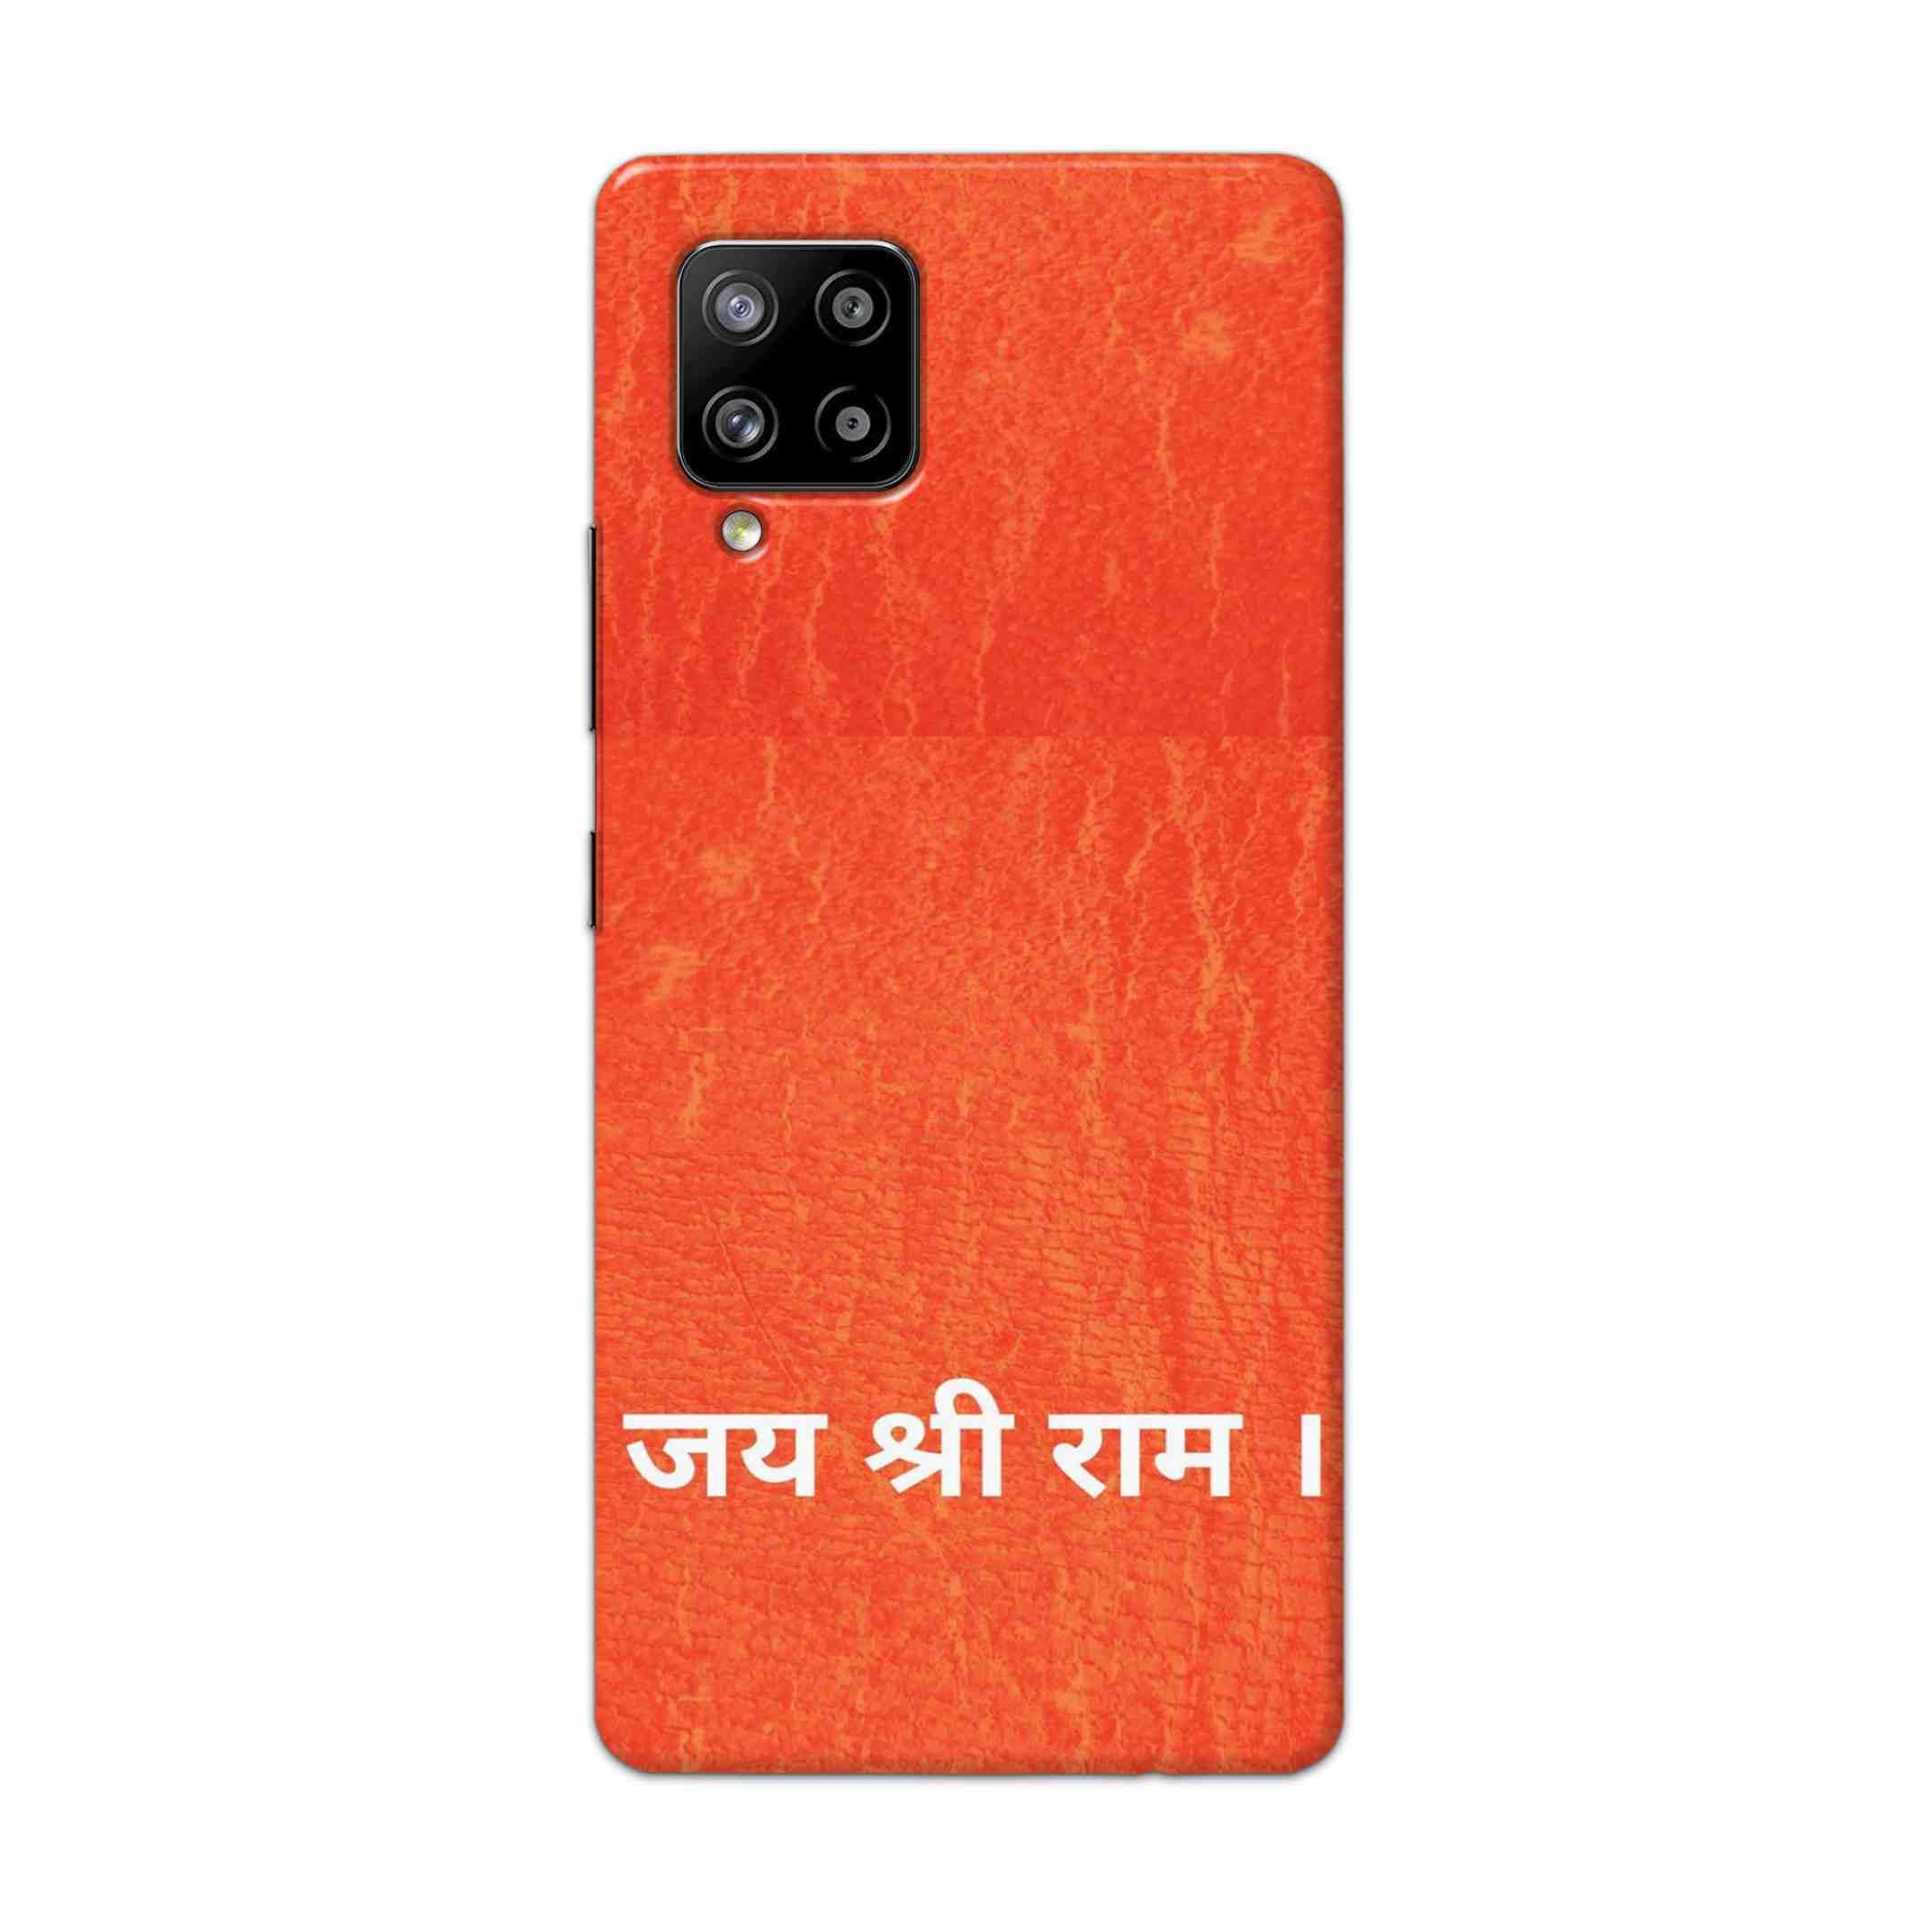 Buy Jai Shree Ram Hard Back Mobile Phone Case Cover For Samsung Galaxy M42 Online